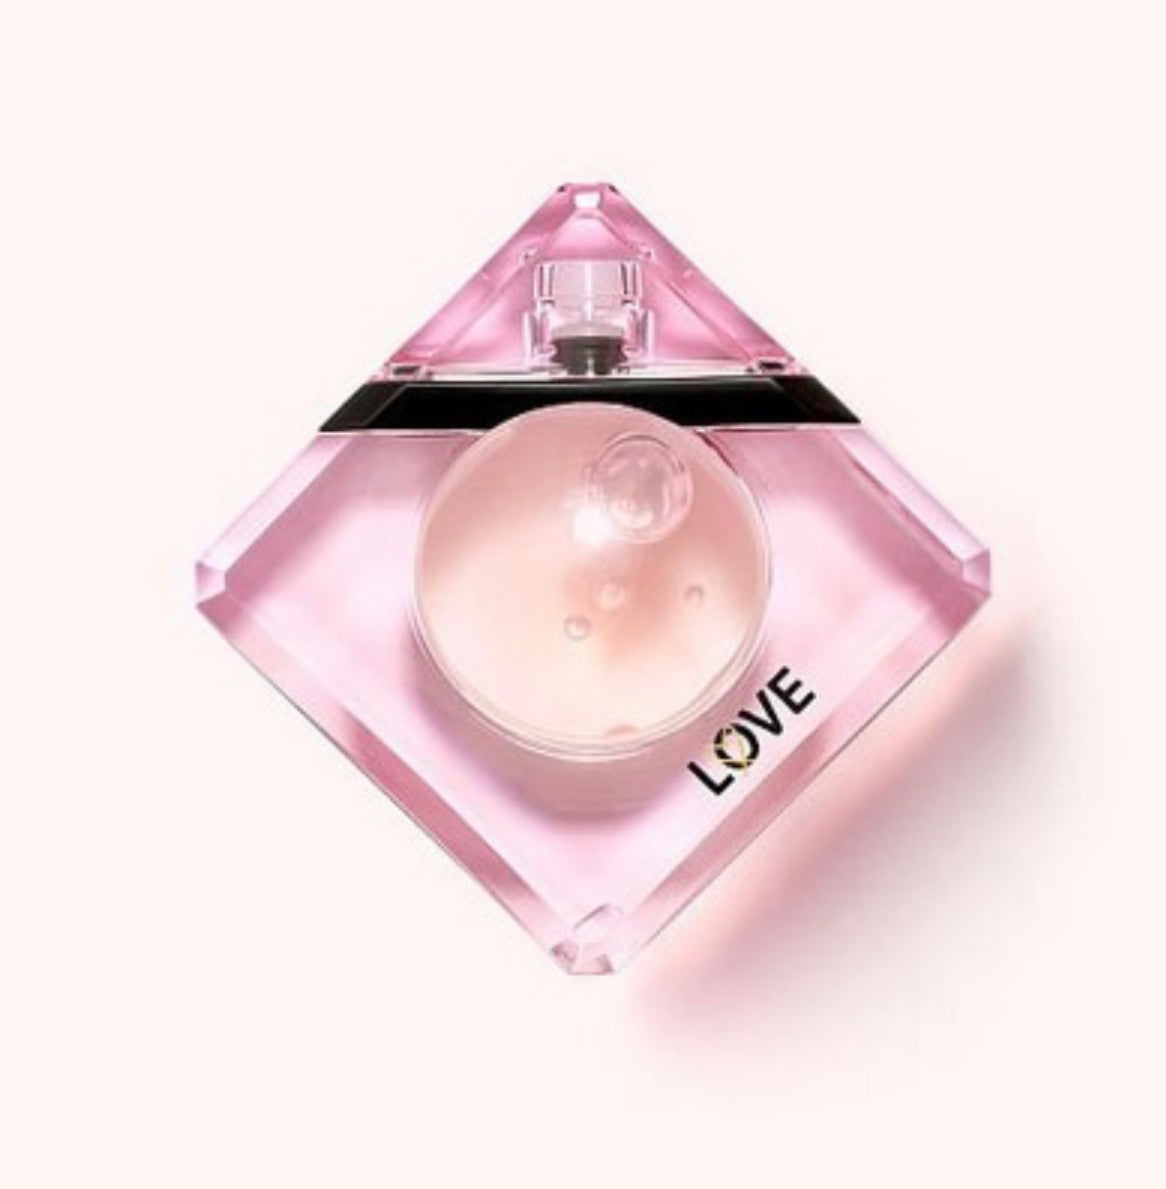 ,,Victoria’s Secret Gel Perfume”